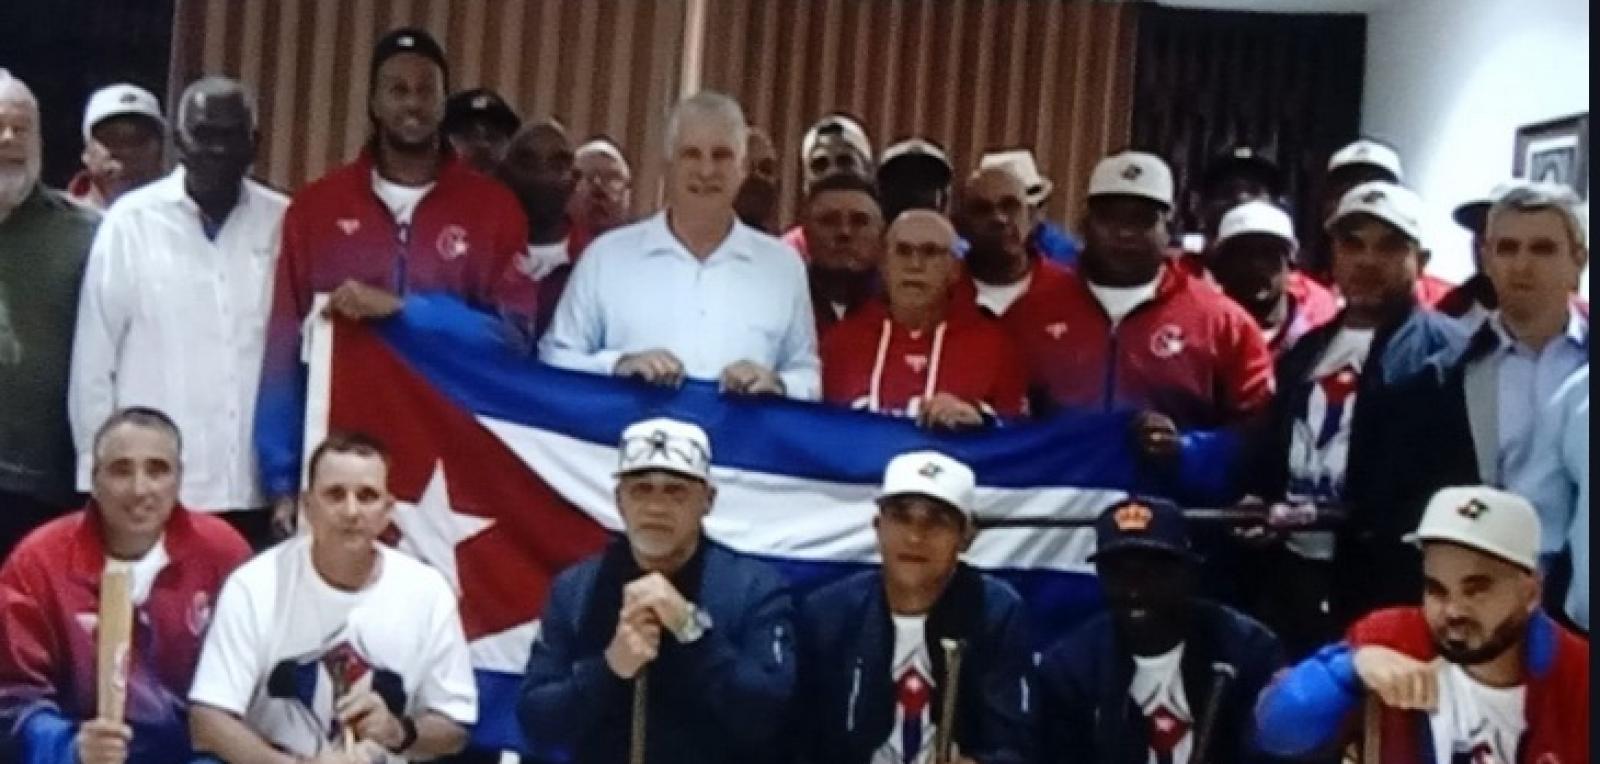 Cuban president welcomes baseball team